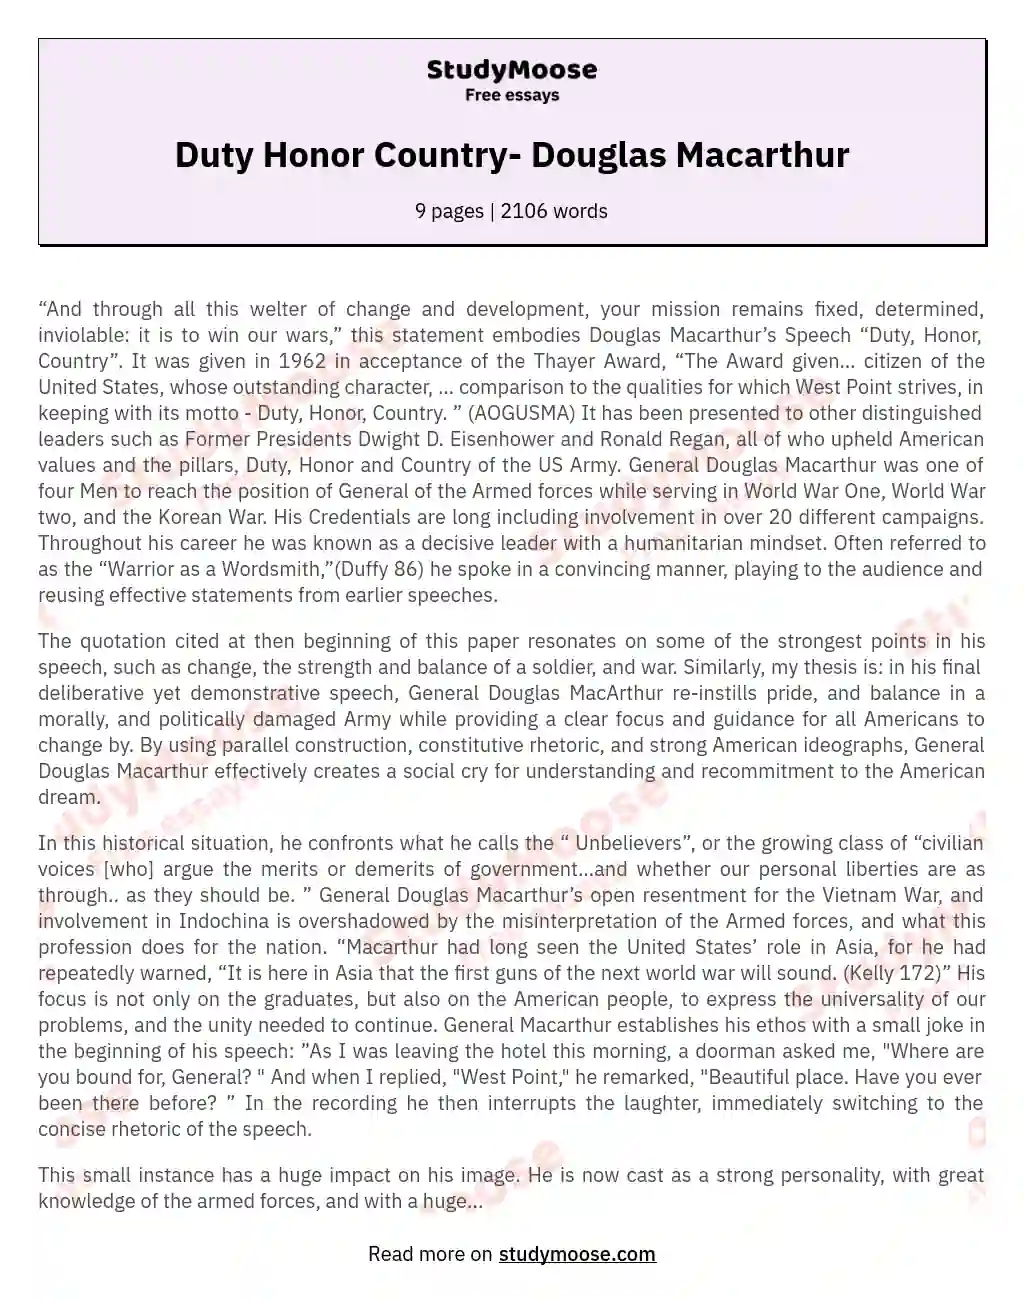 Duty Honor Country- Douglas Macarthur essay